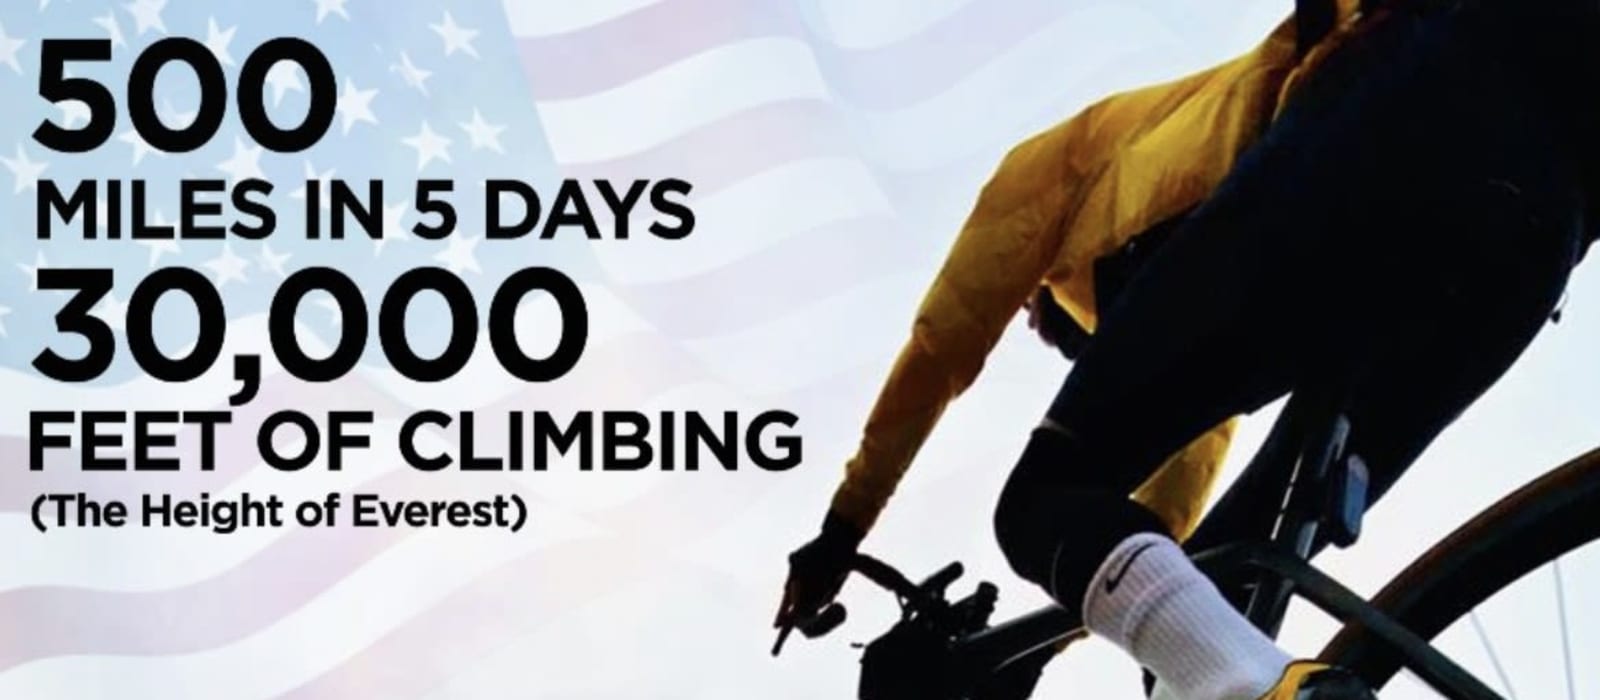 Kidz Klub Leeds Fundraiser - San Francisco to LA - 500 Miles, 30,000 Feet of Climbing